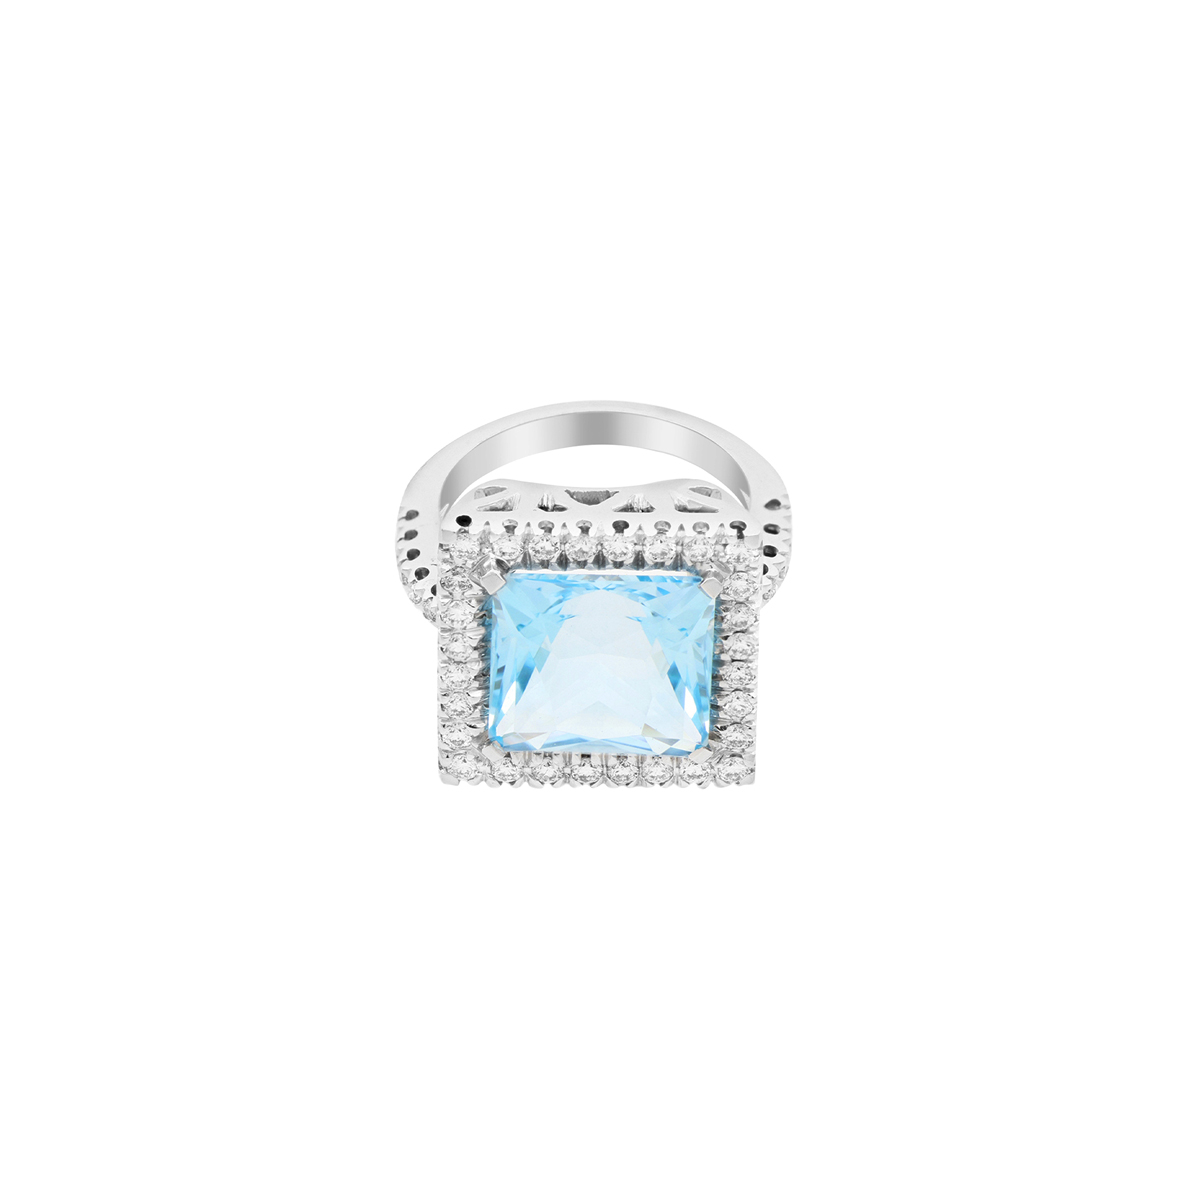 Princess Cut Topaz Ring with Diamond Halo